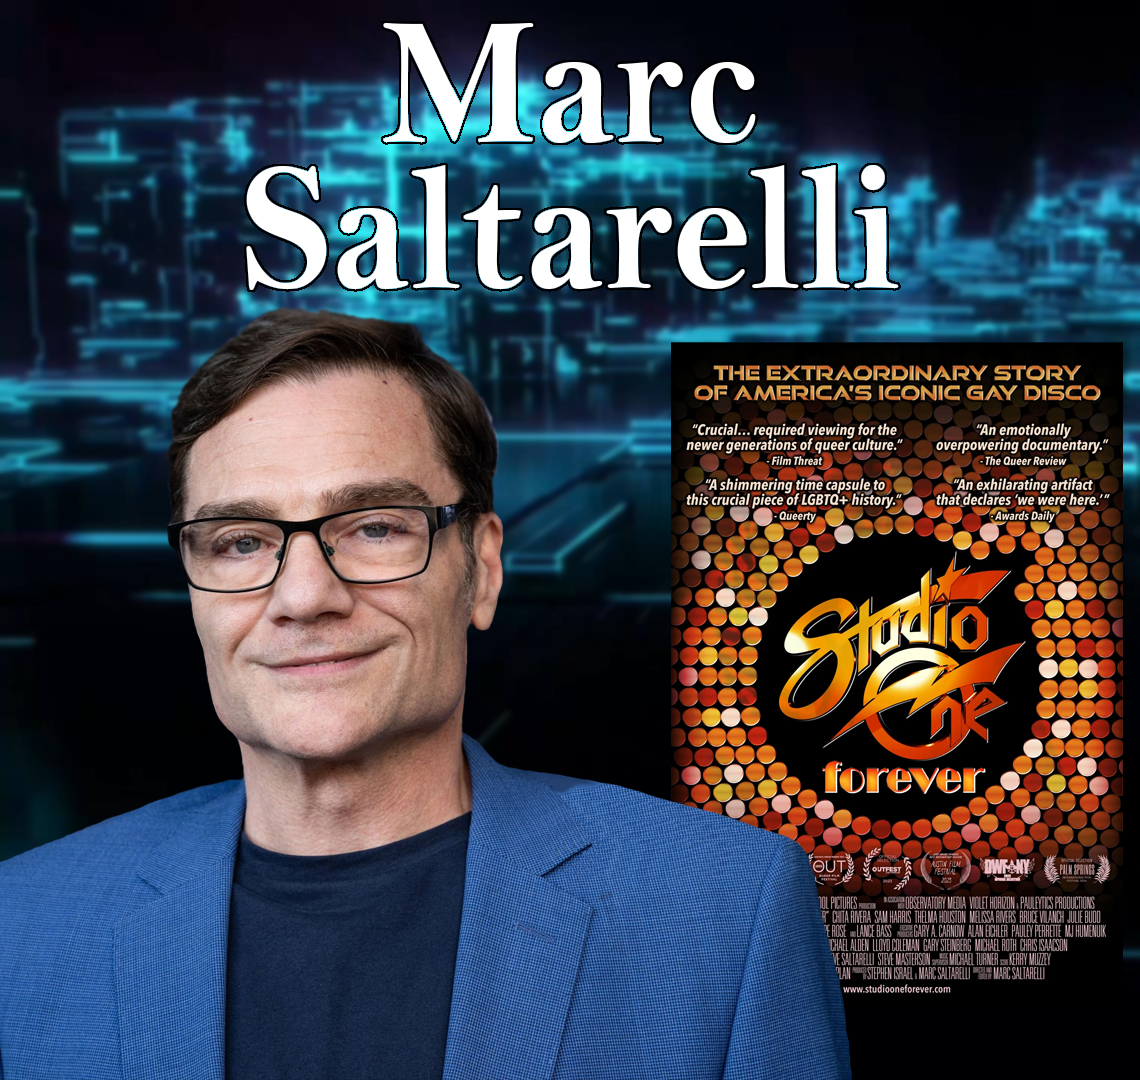 Filmmaker Marc Saltarelli (“Studio One Forever”) Guests On Harvey Brownstone Interviews